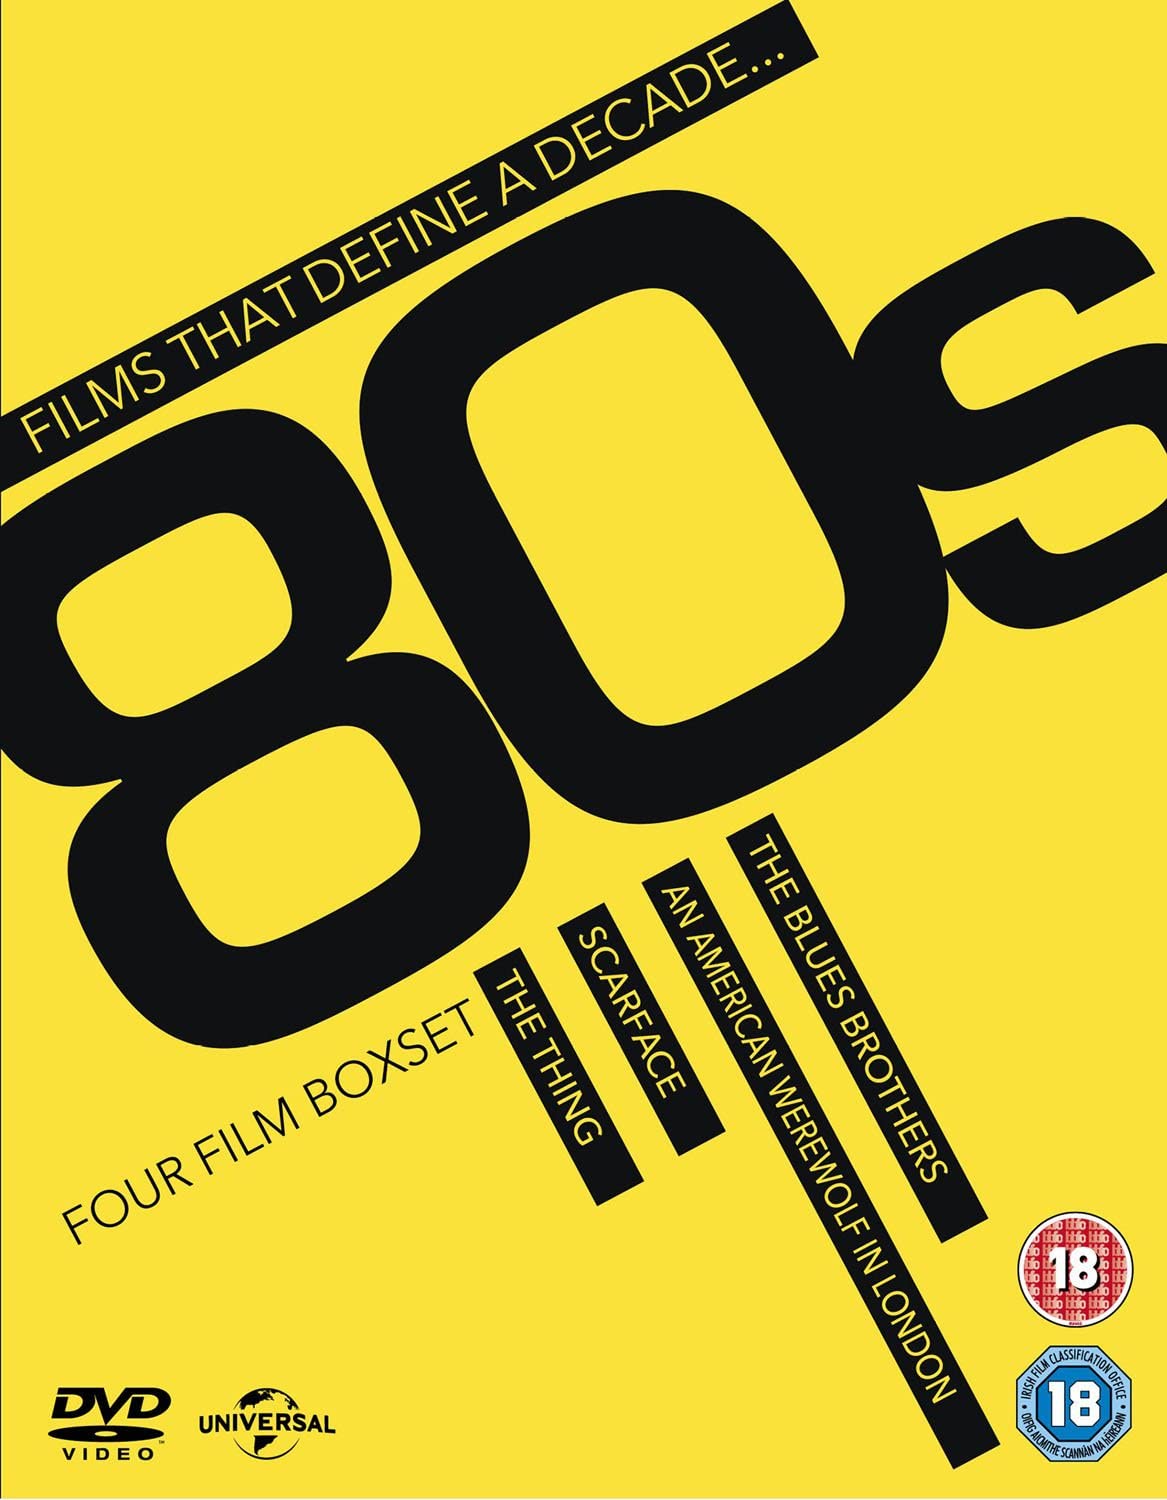 Films That Define A Decade: '80s (DVD)